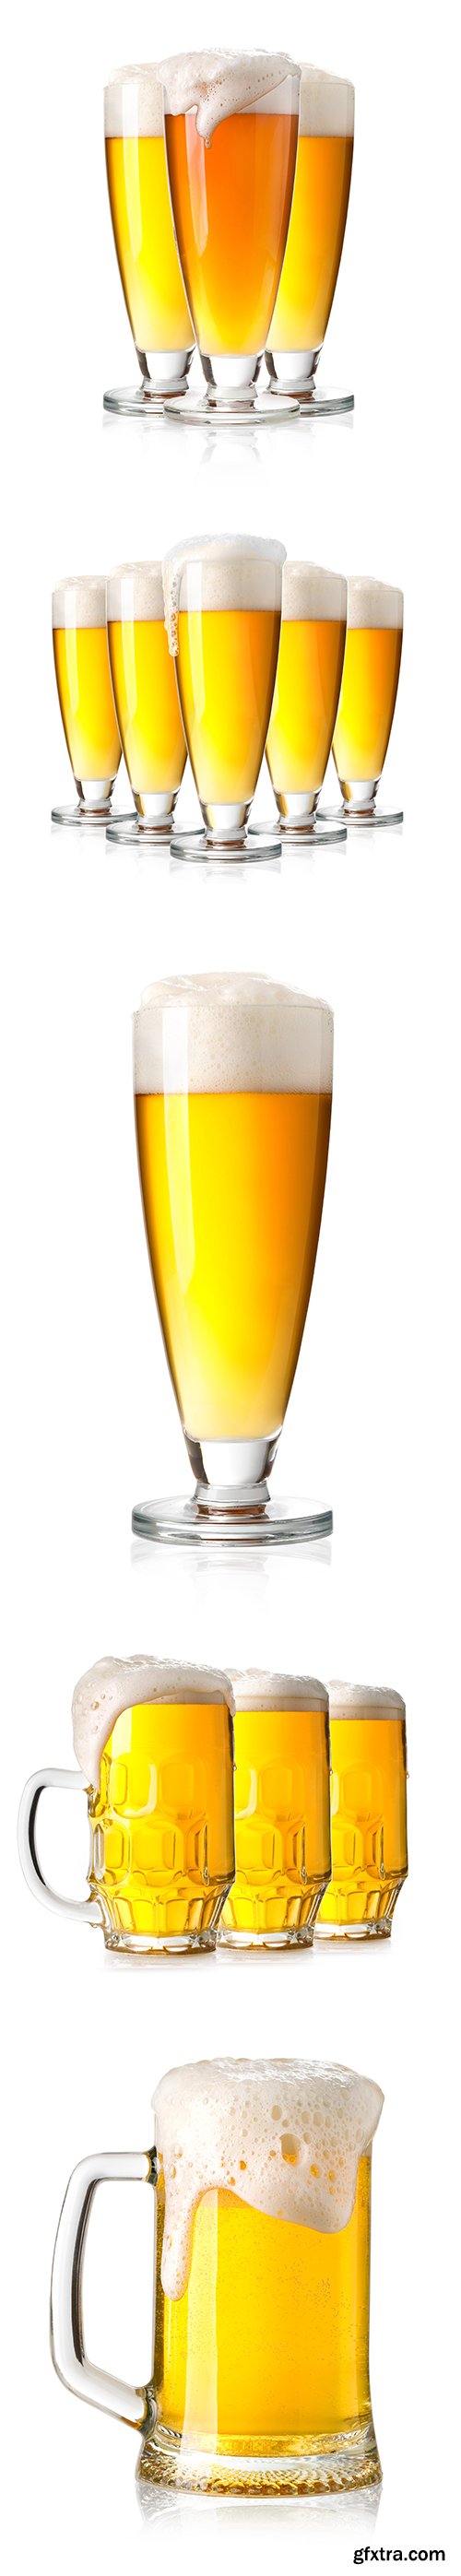 Beer Glass Isolated - 14xJPGs